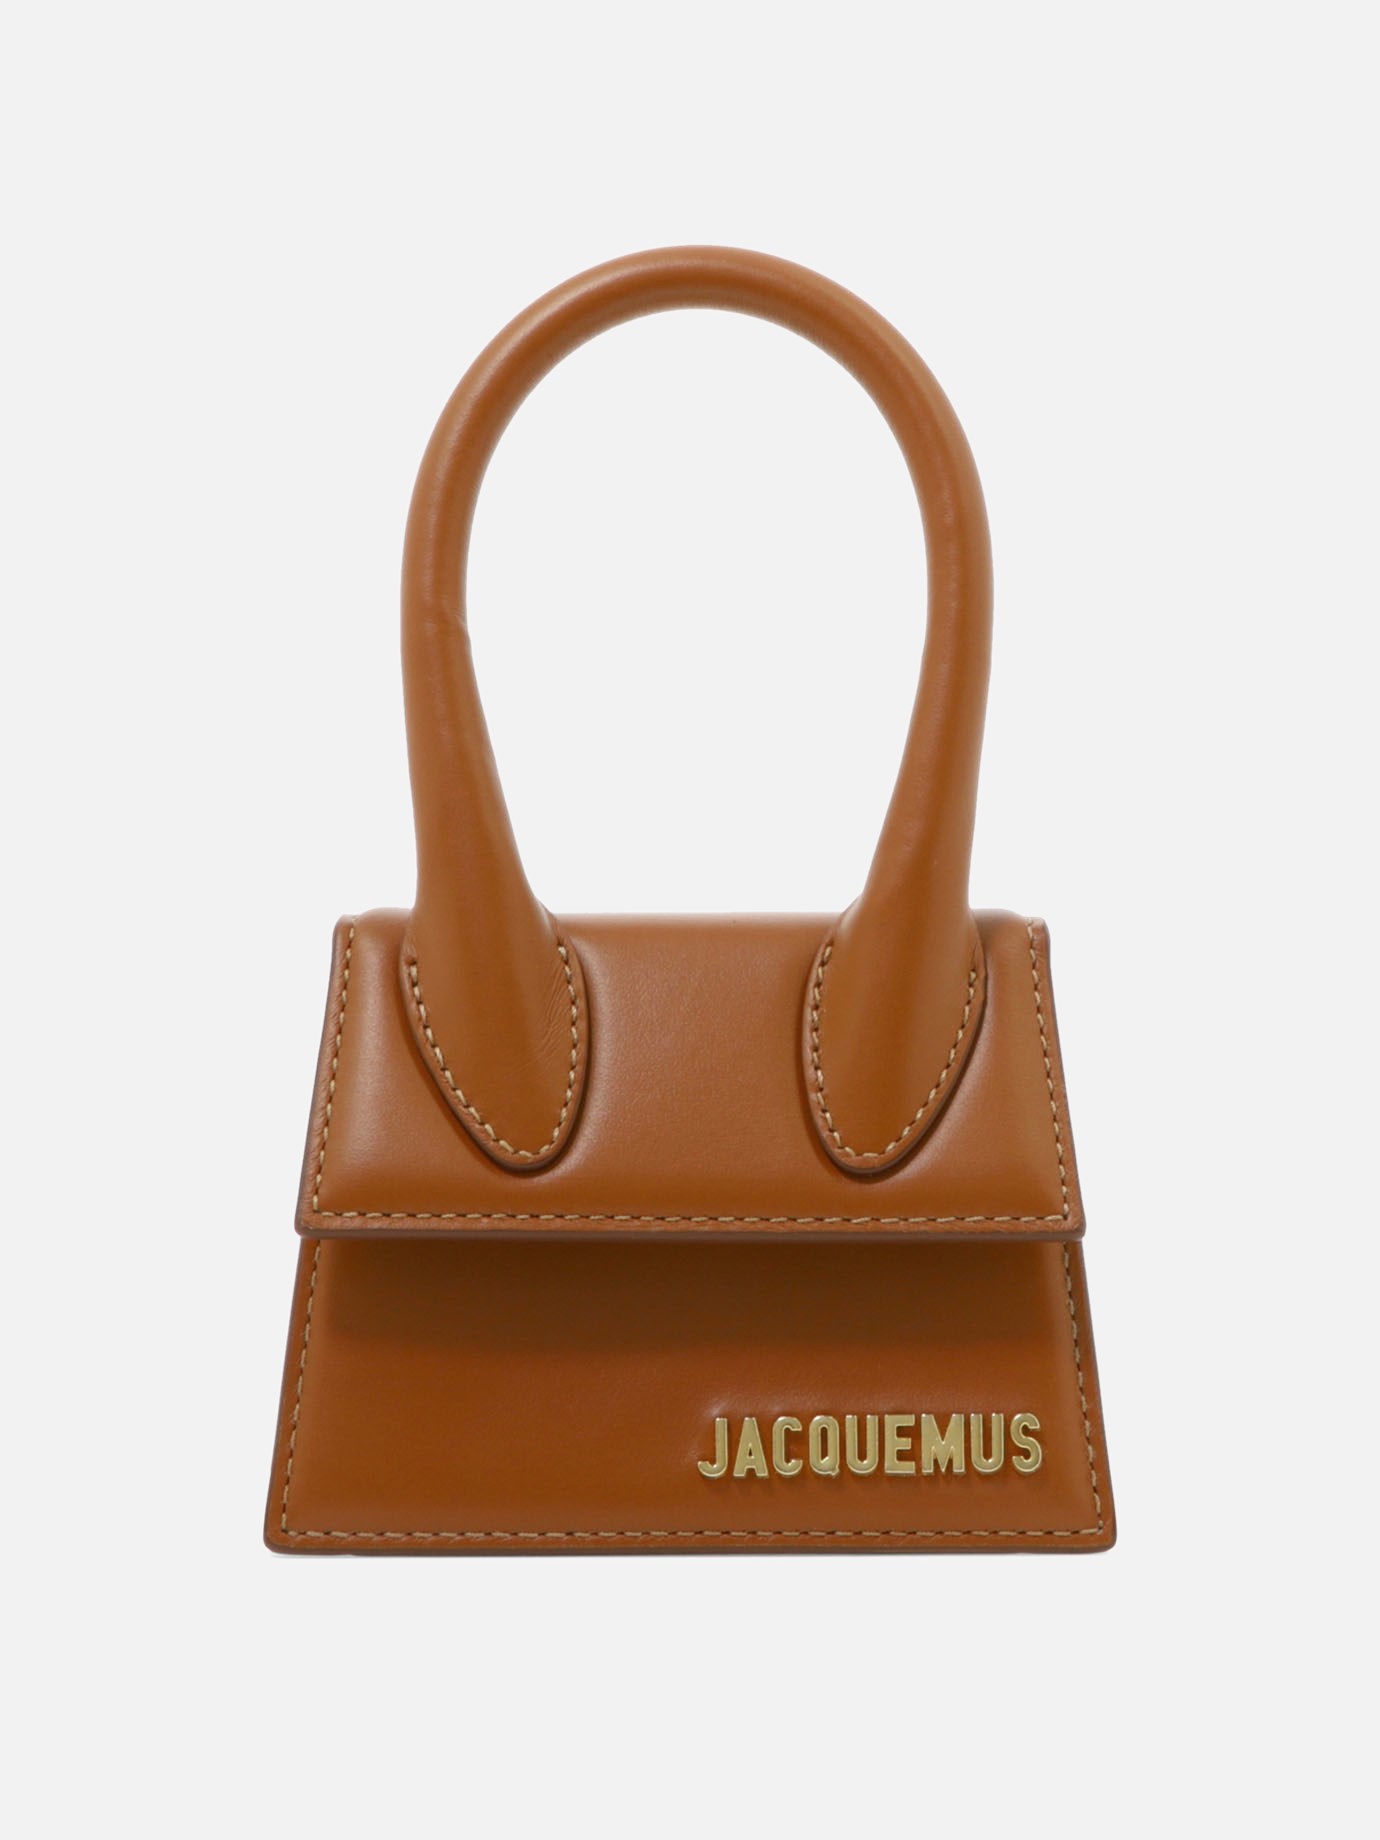  Le Chiquito  handbagby Jacquemus - 1